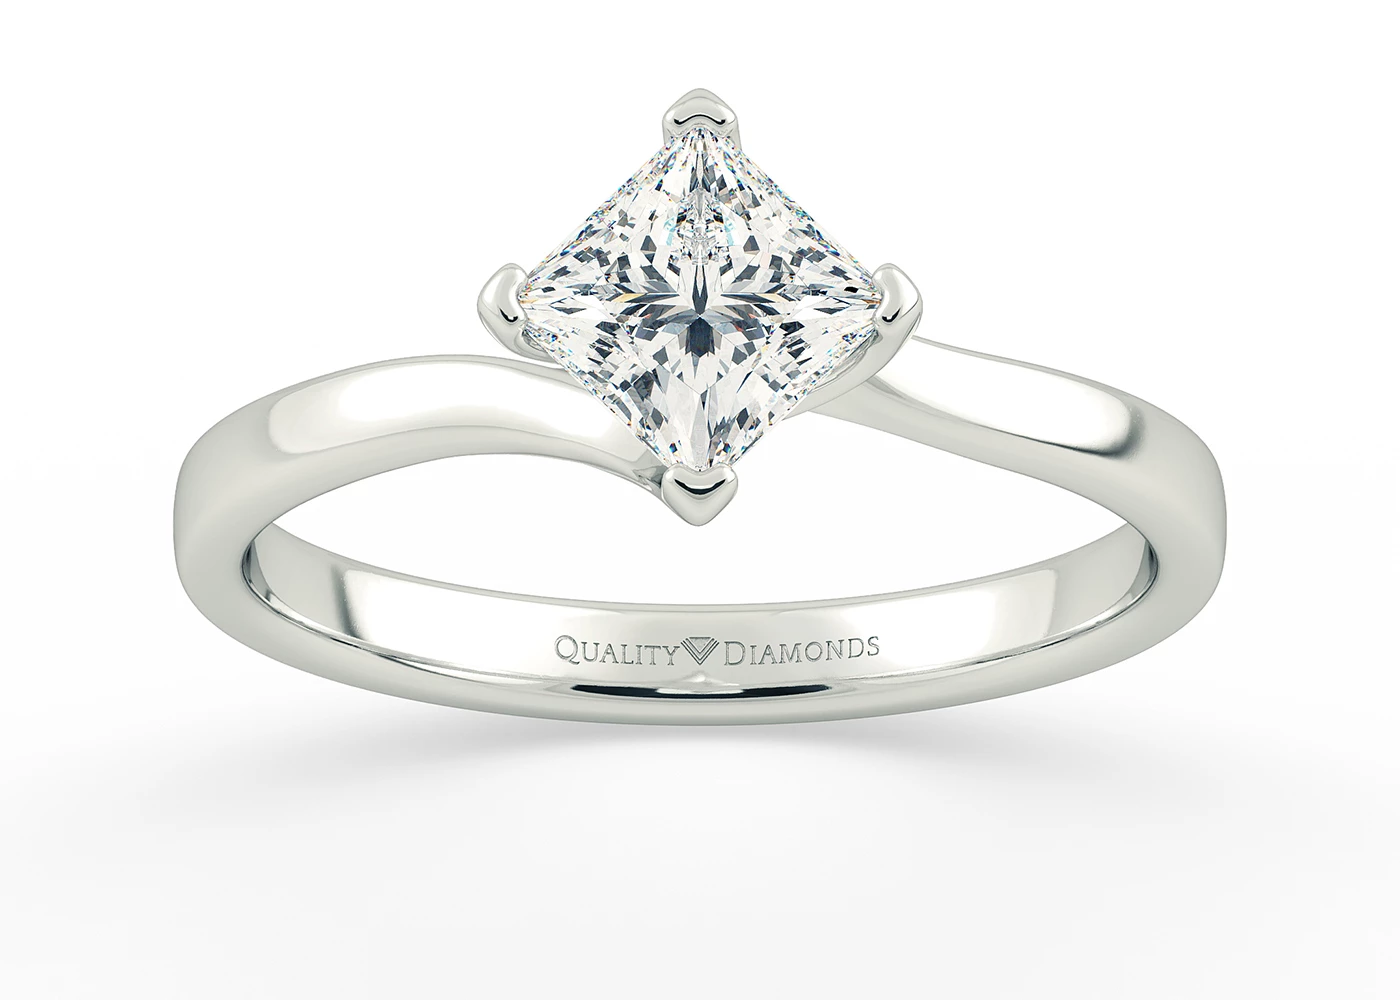 Princess Cura Diamond Ring in Platinum